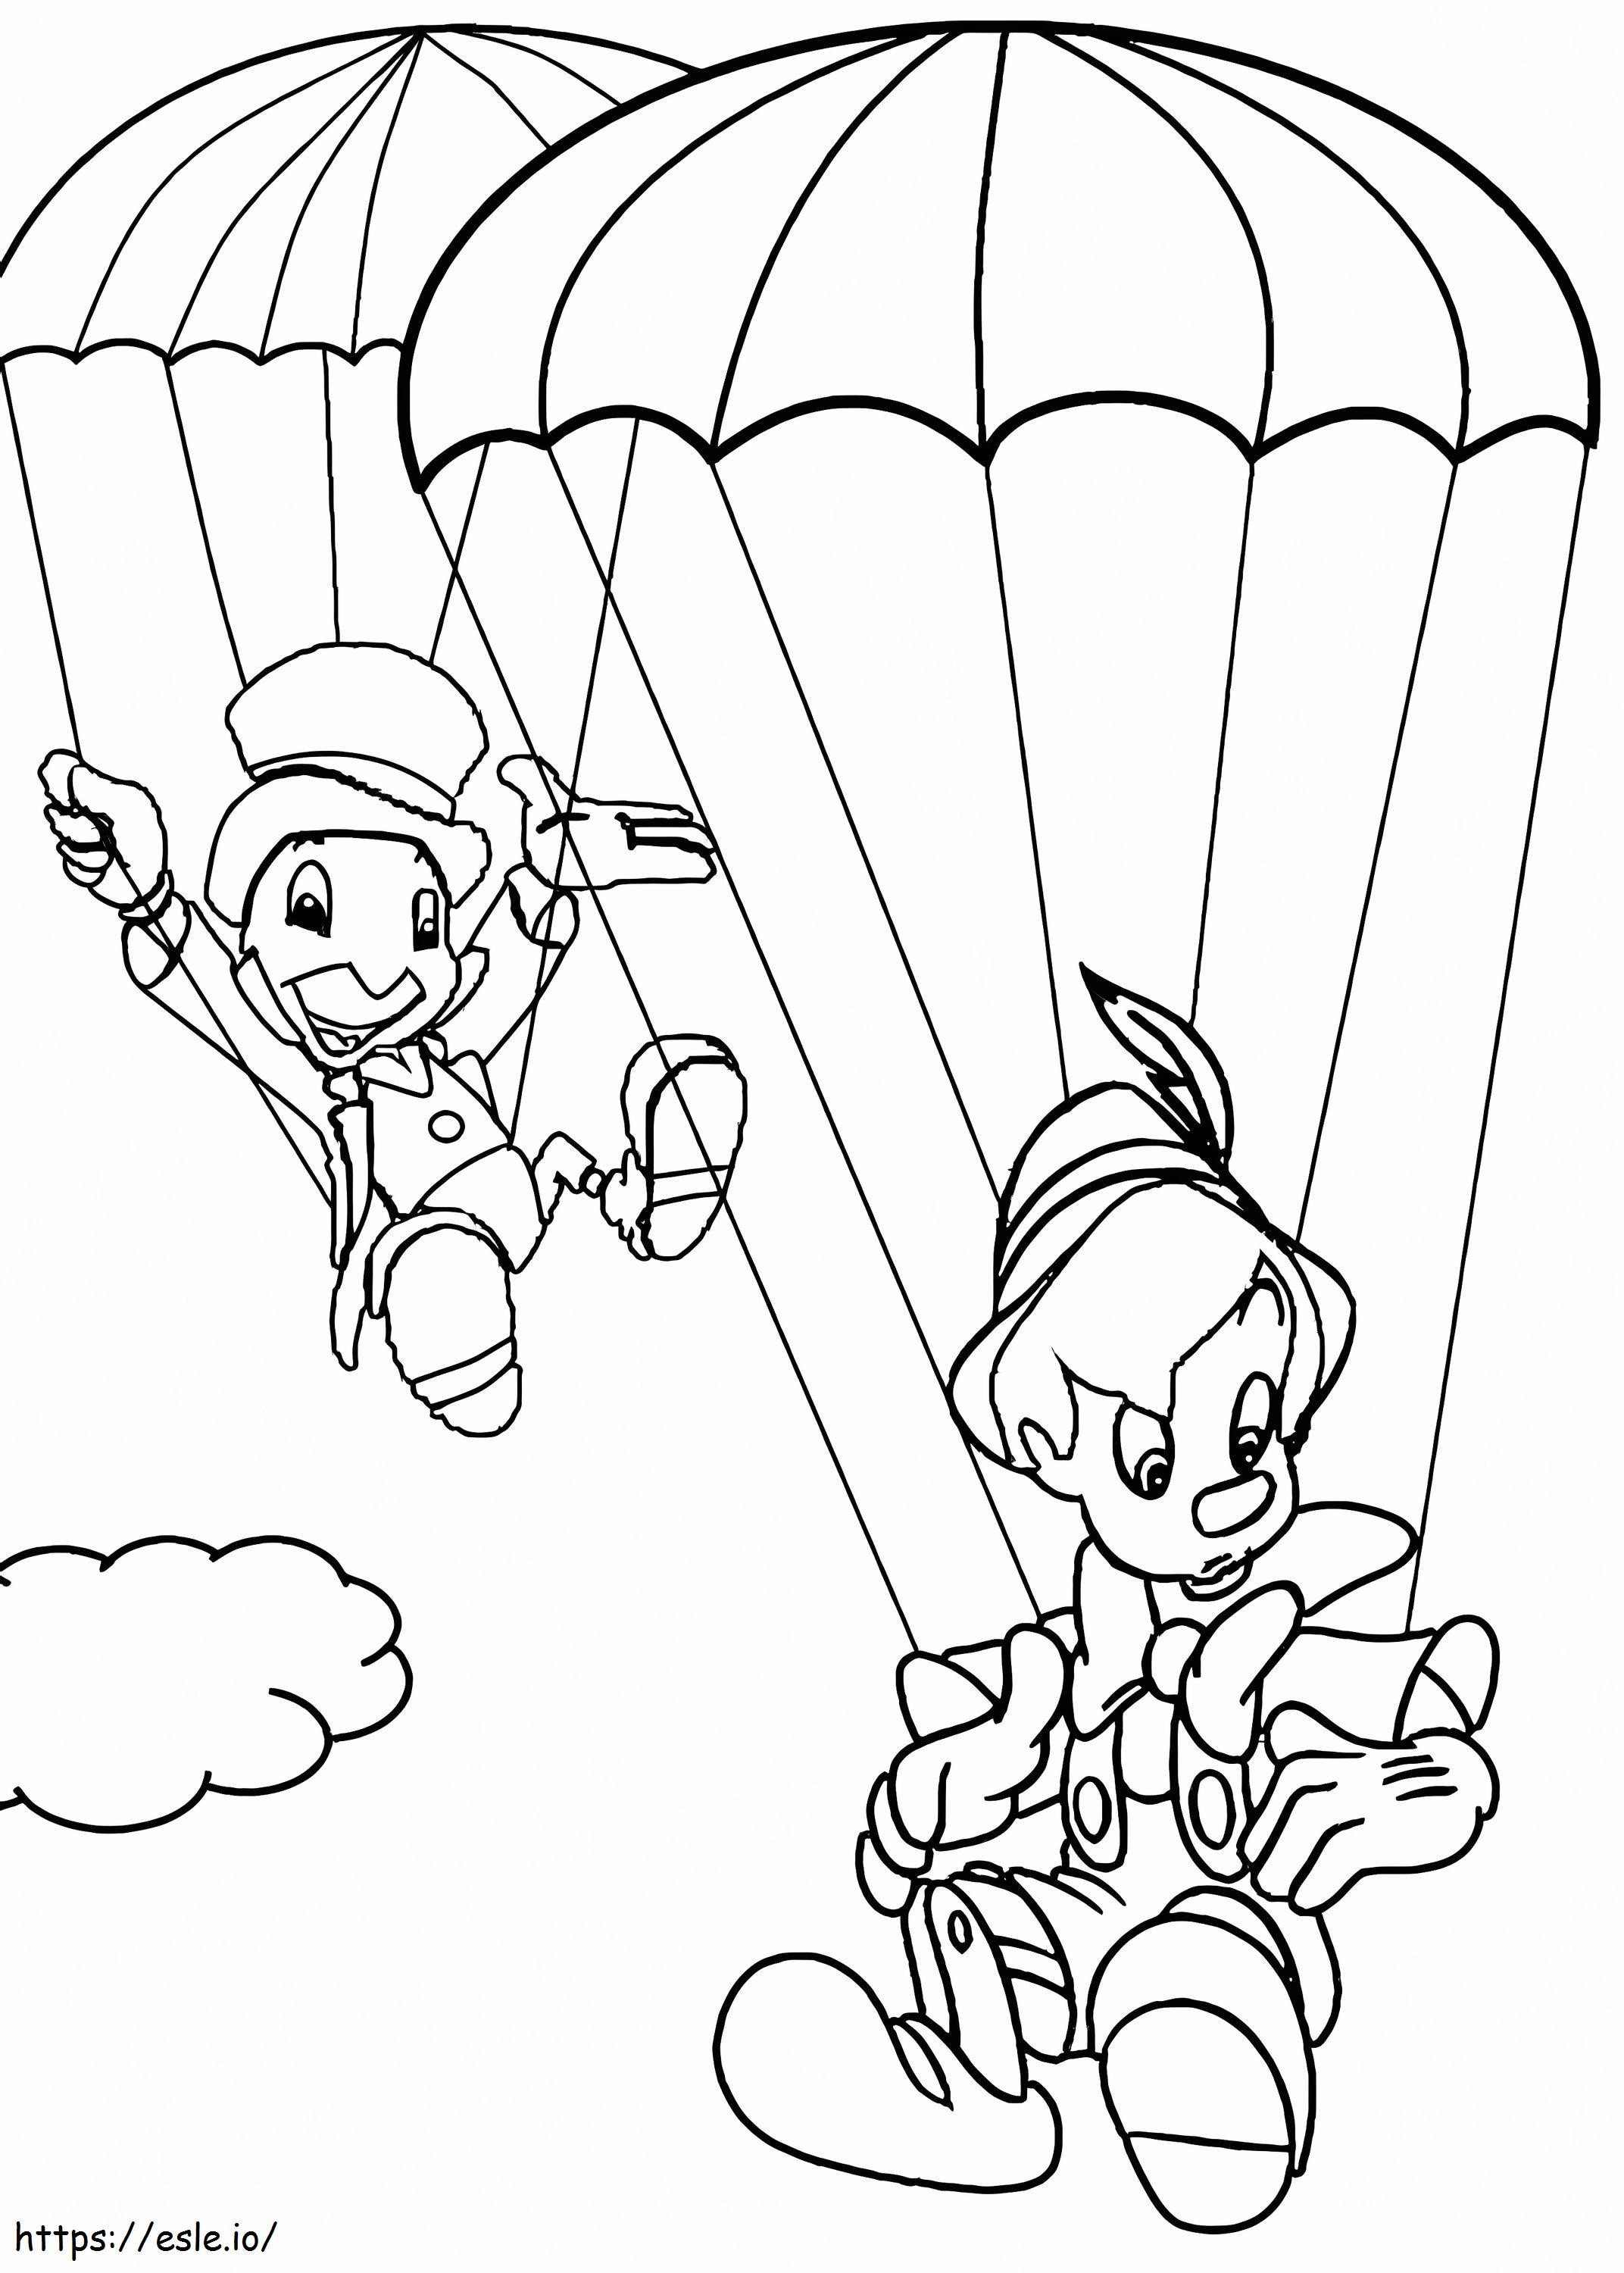 Pinokio i Jiminy Krykiet kolorowanka